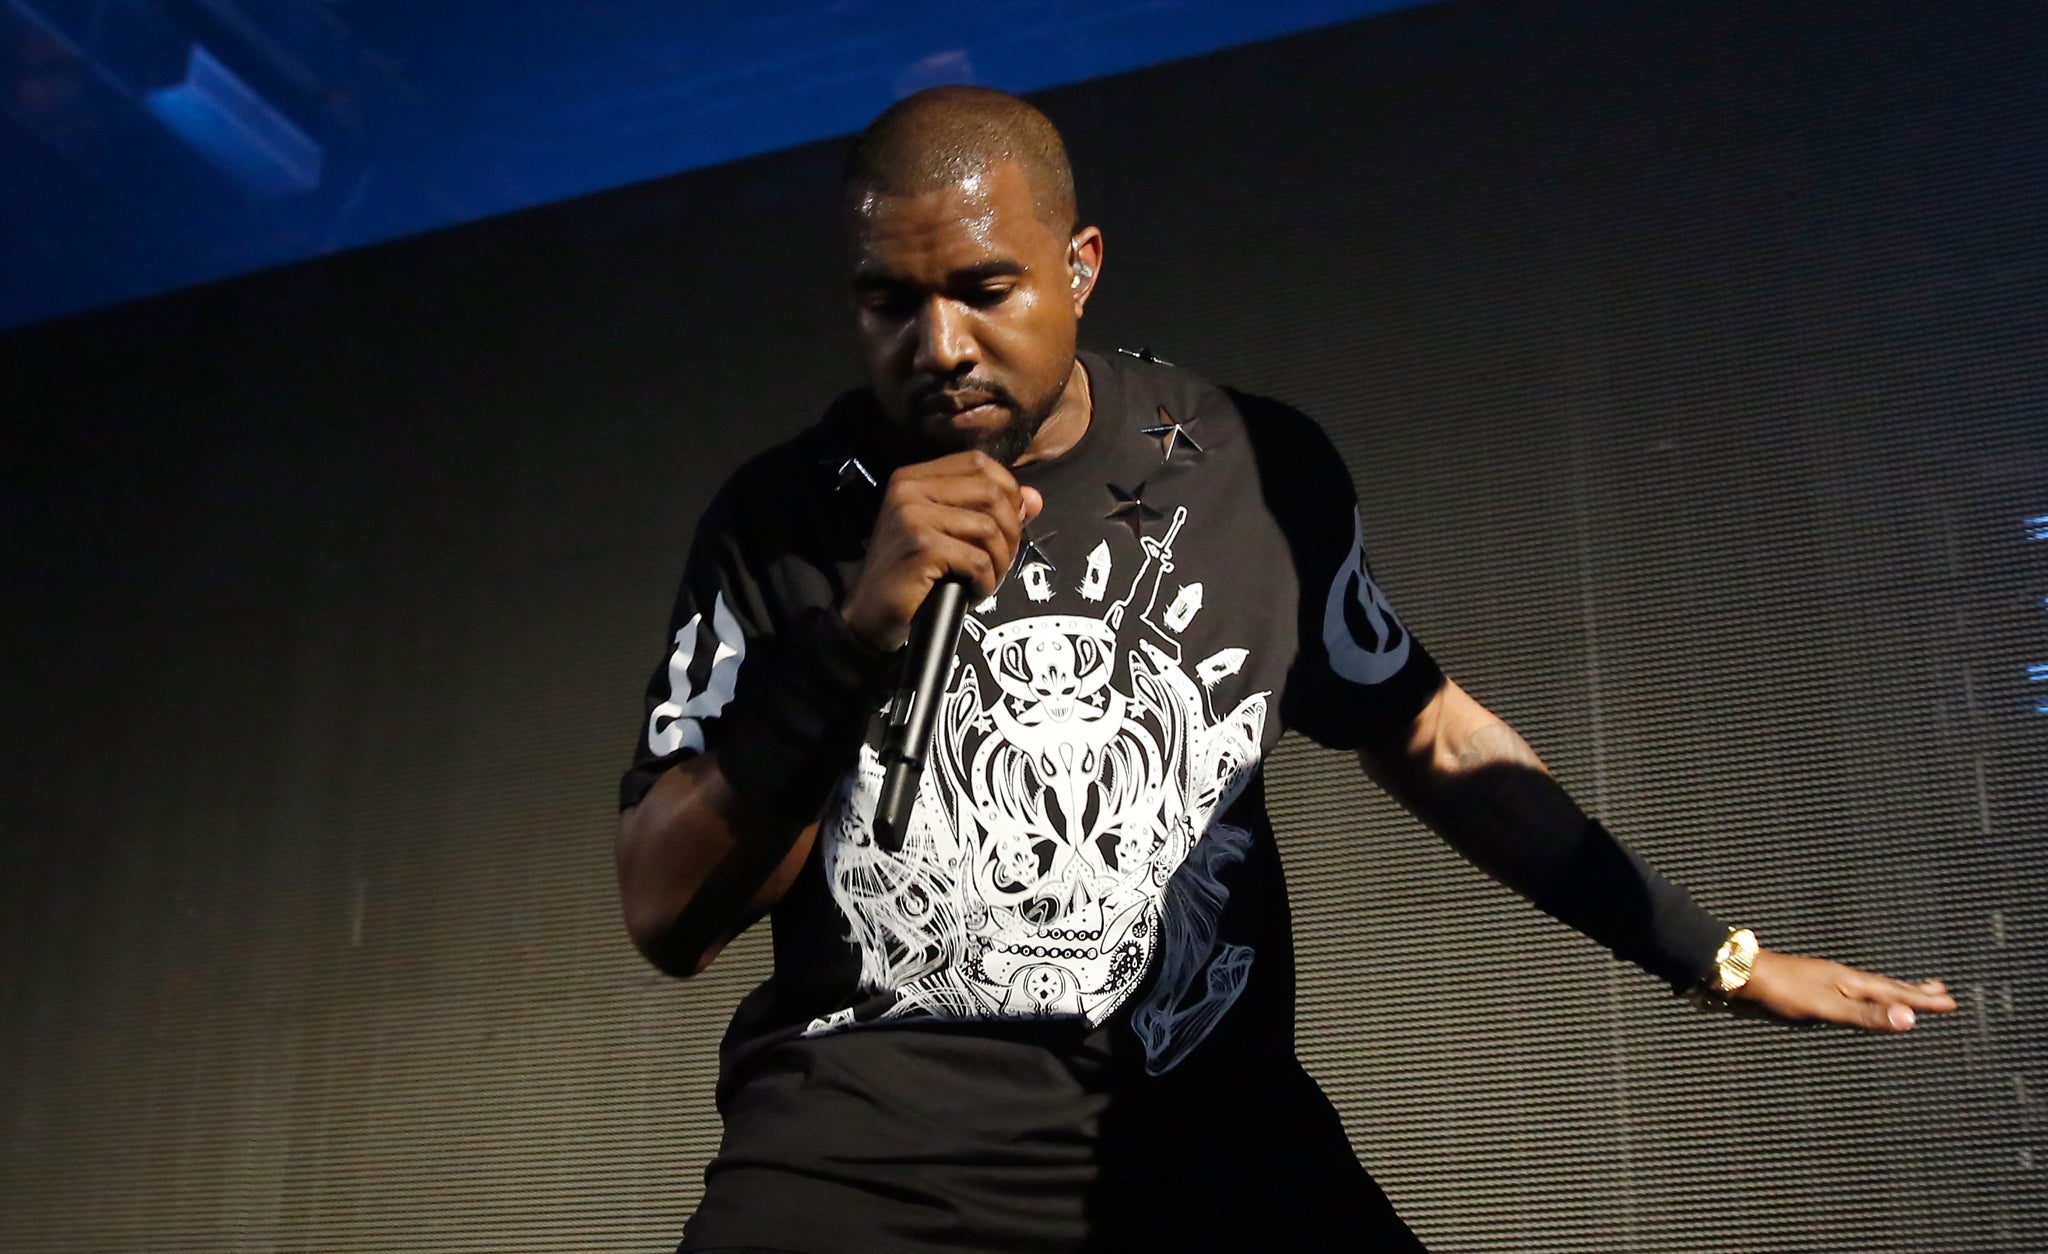 Kanye West performed at London's Koko last night